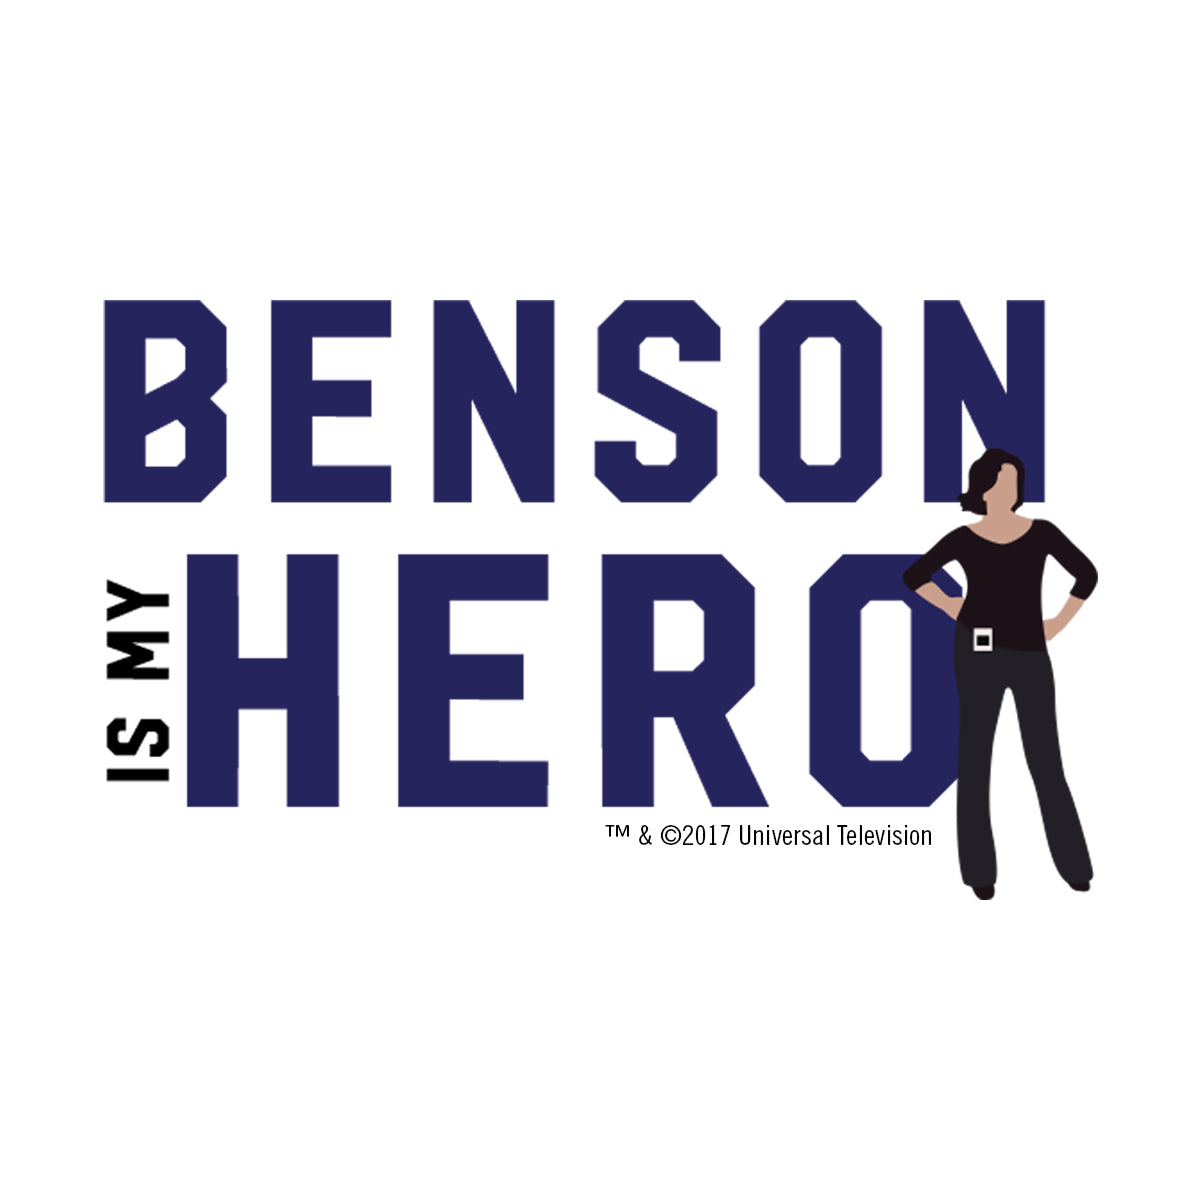 Law & Order: SVU Benson is My Hero White Mug